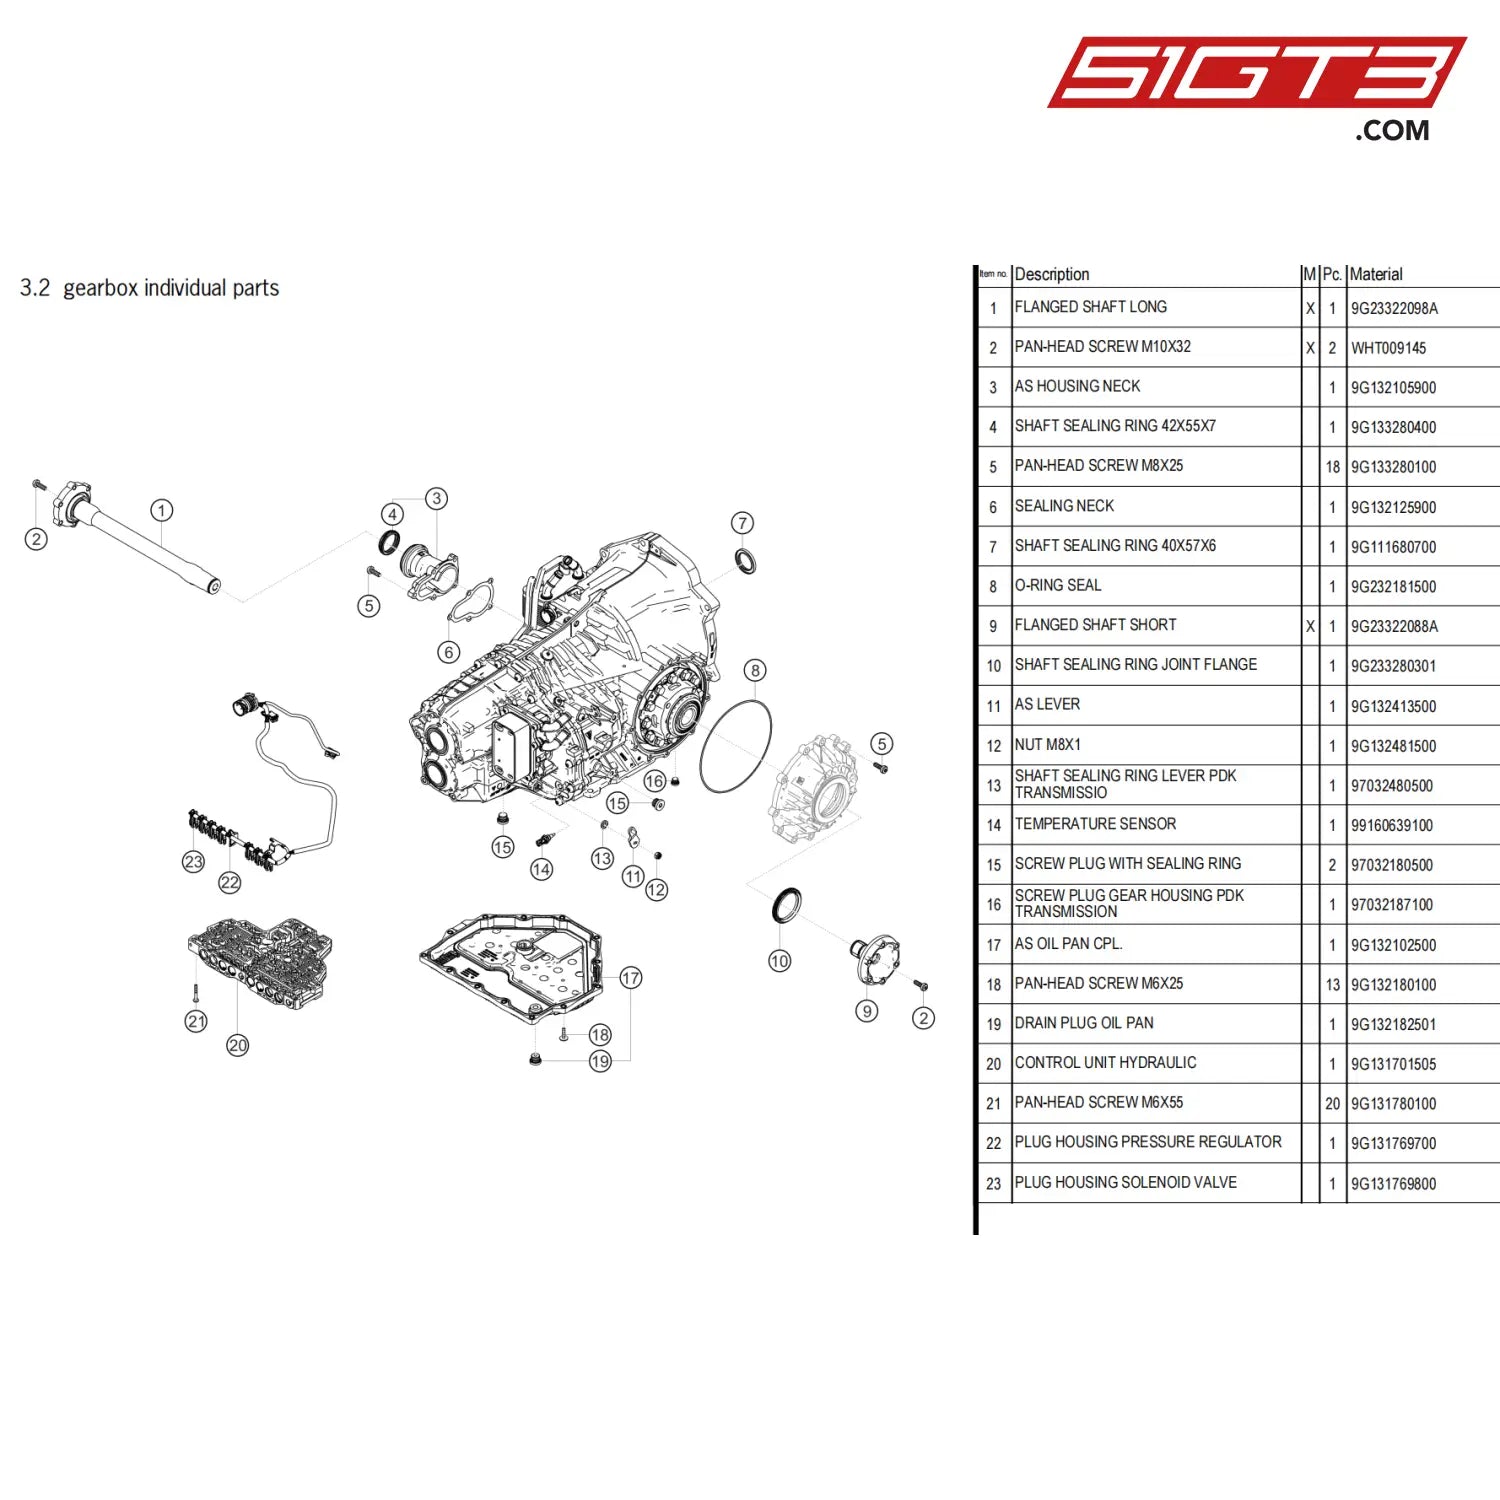 Flanged Shaft Long - 9G23322098A [Porsche 718 Cayman Gt4 Clubsport] Gearbox Individual Parts